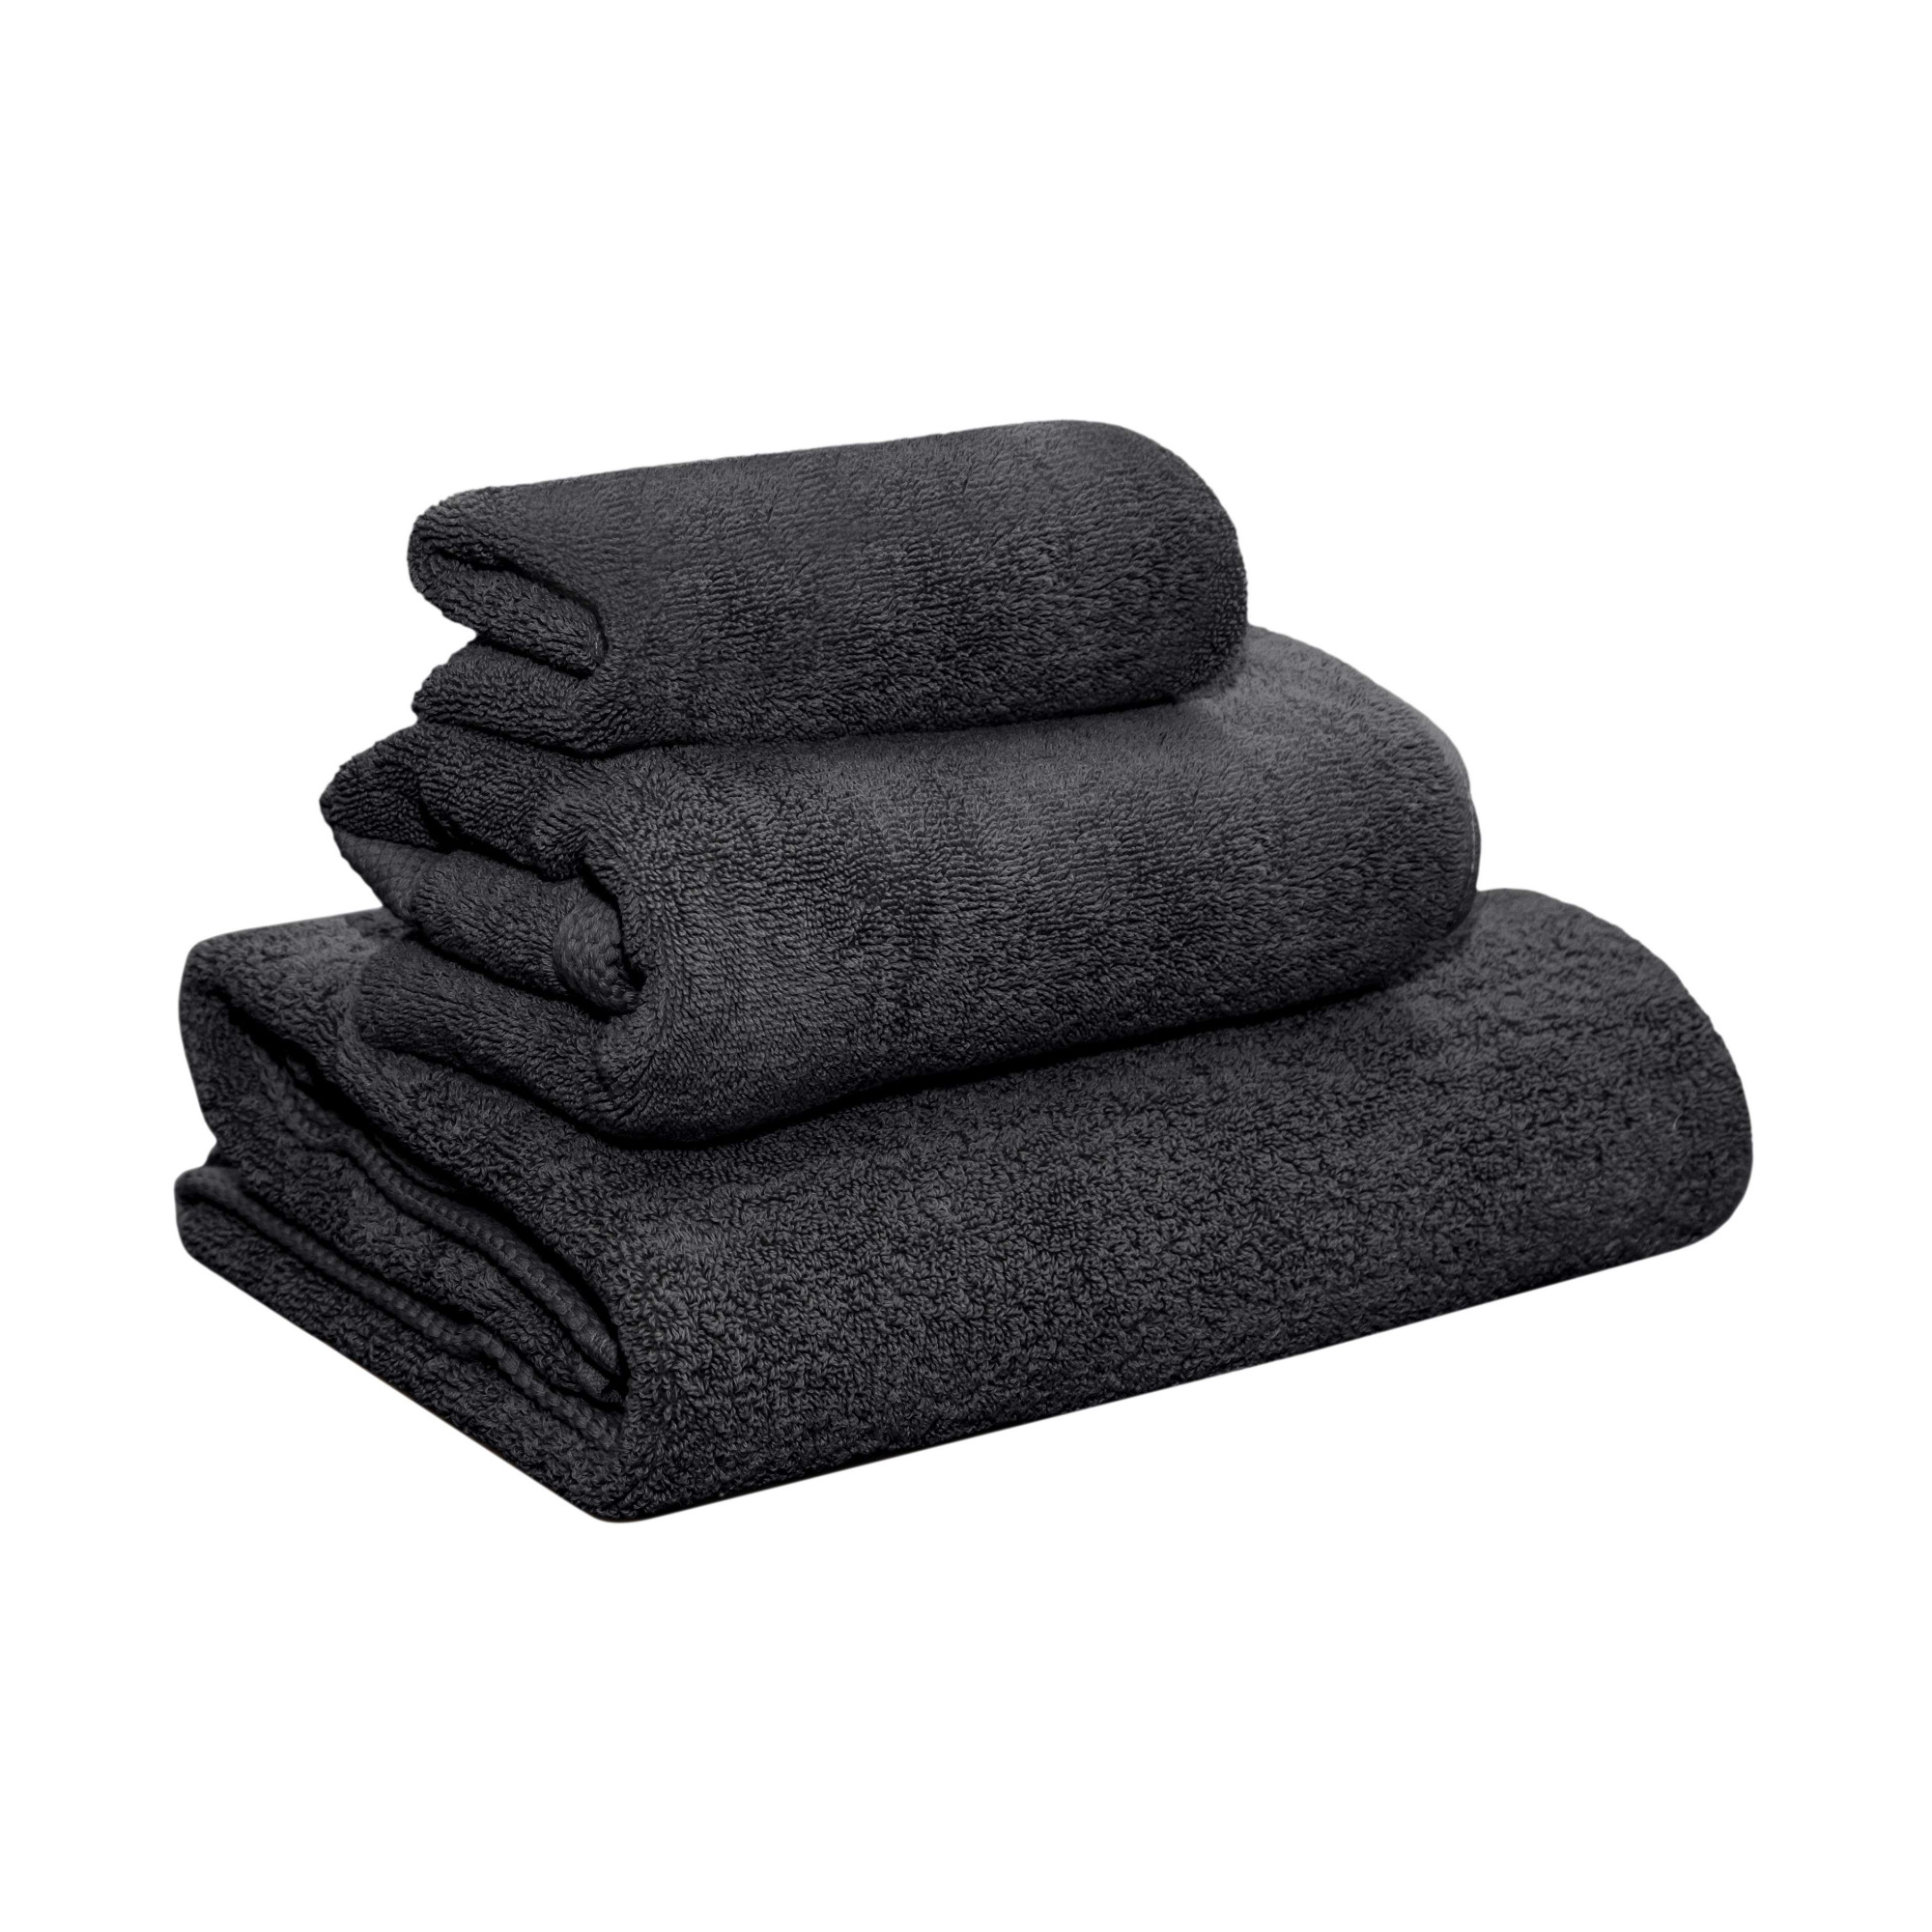 Terry towel 30x50, black, 100% cotton